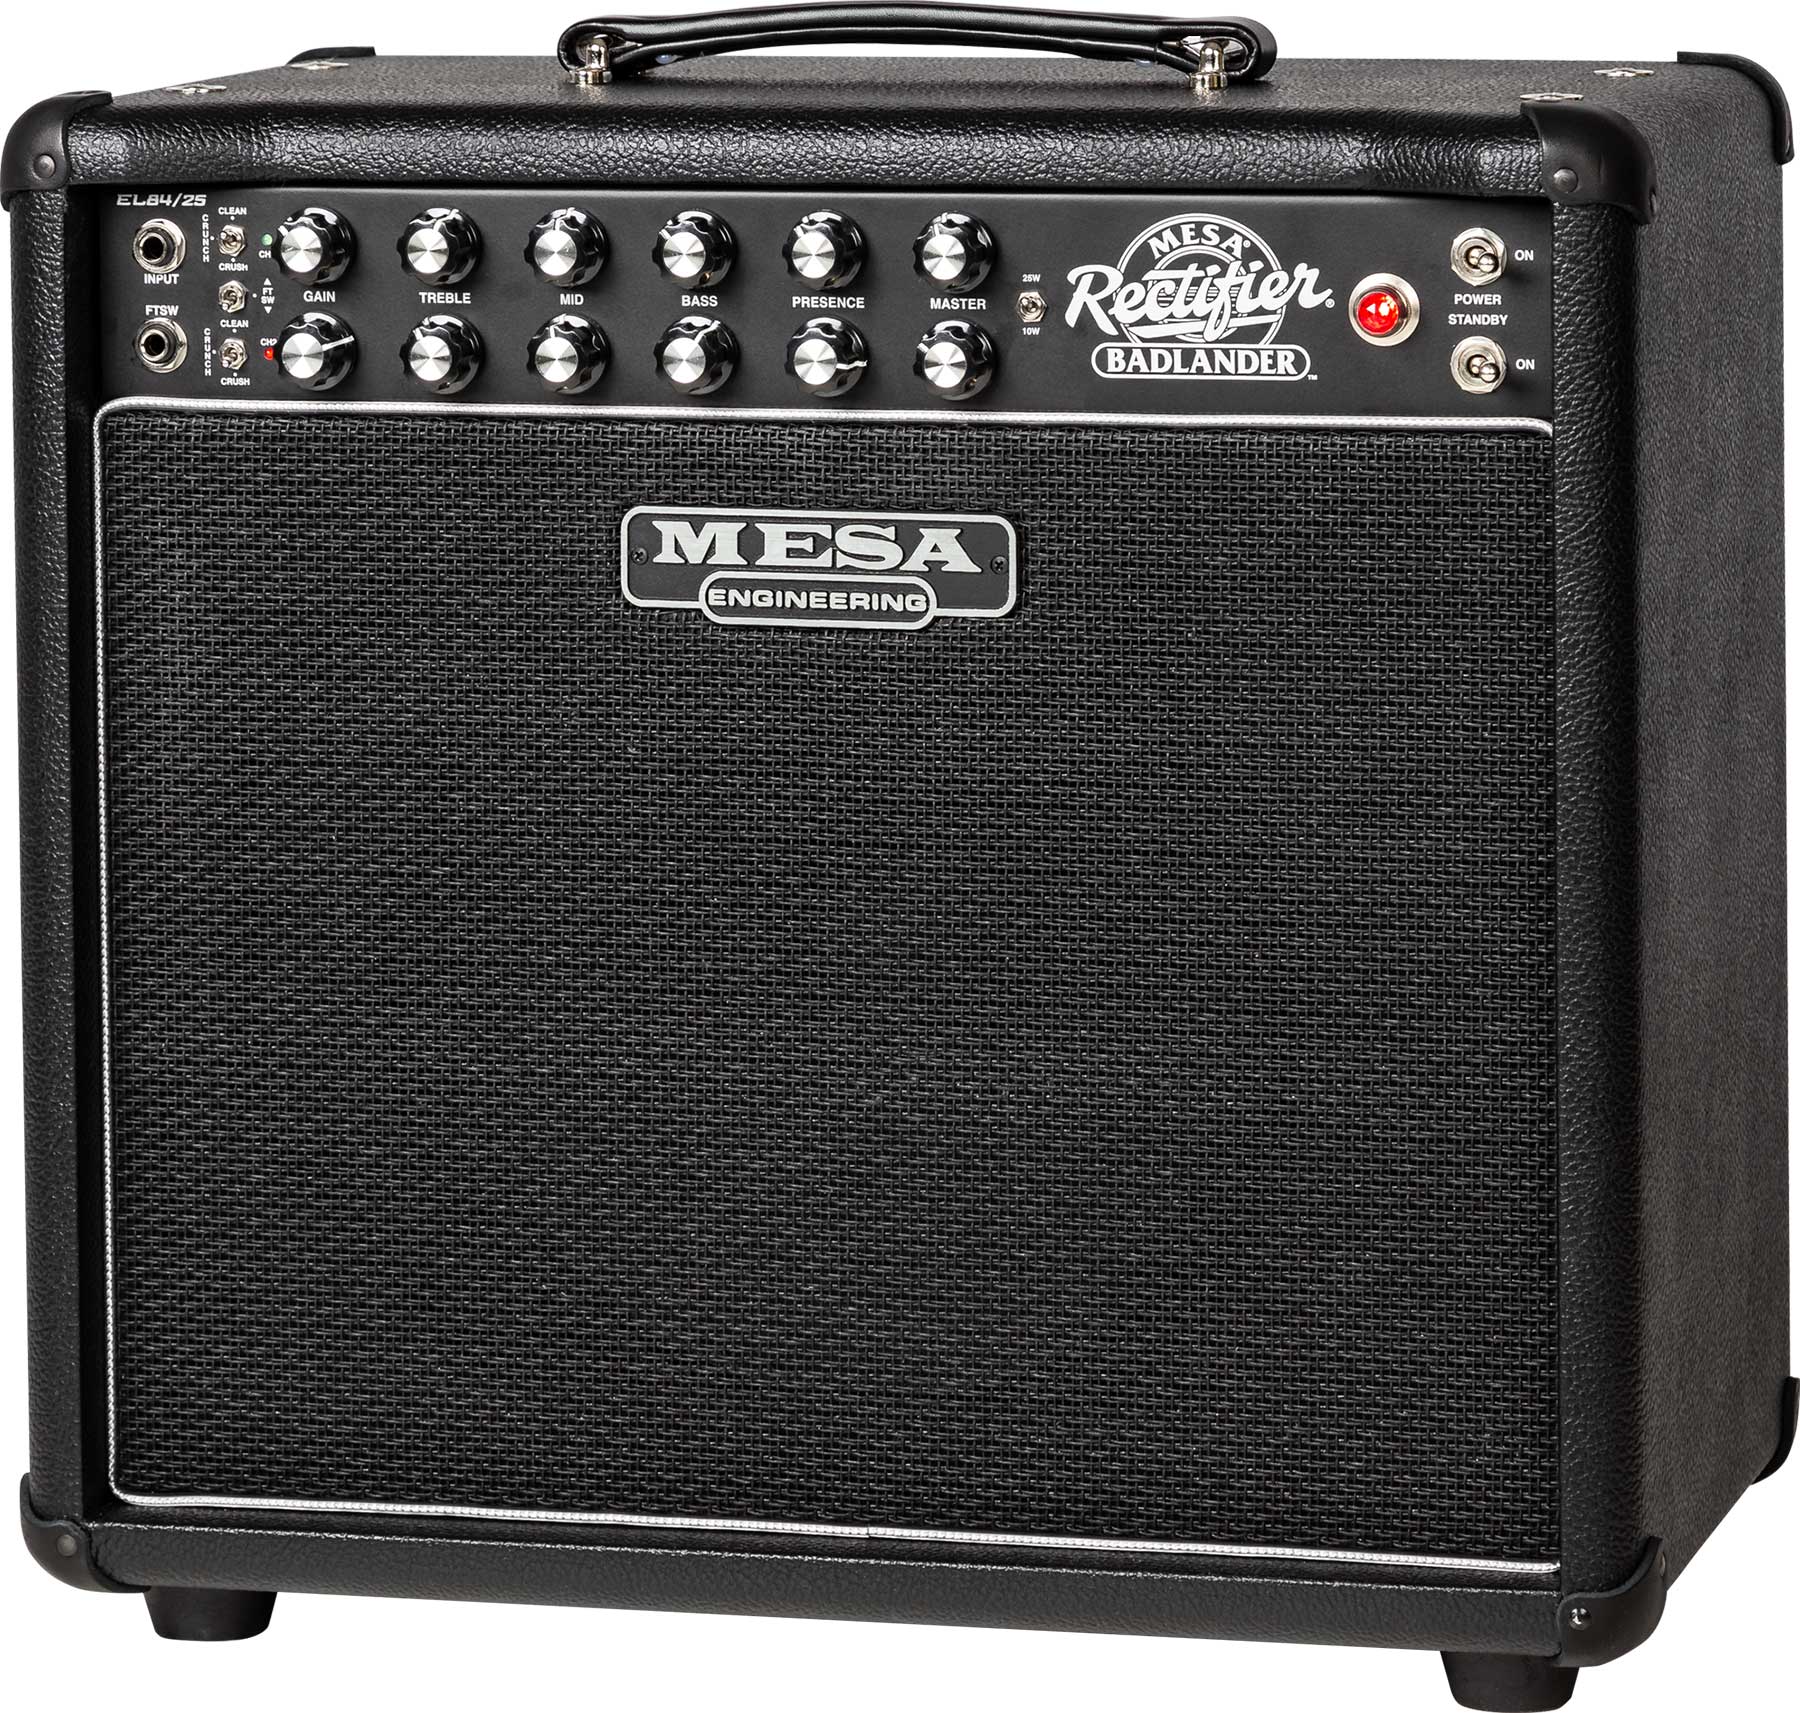 Mesa Boogie Badlander 25 1x12 Combo 10/25w 112 El84 Black Bronco - Ampli Guitare Électrique Combo - Variation 1